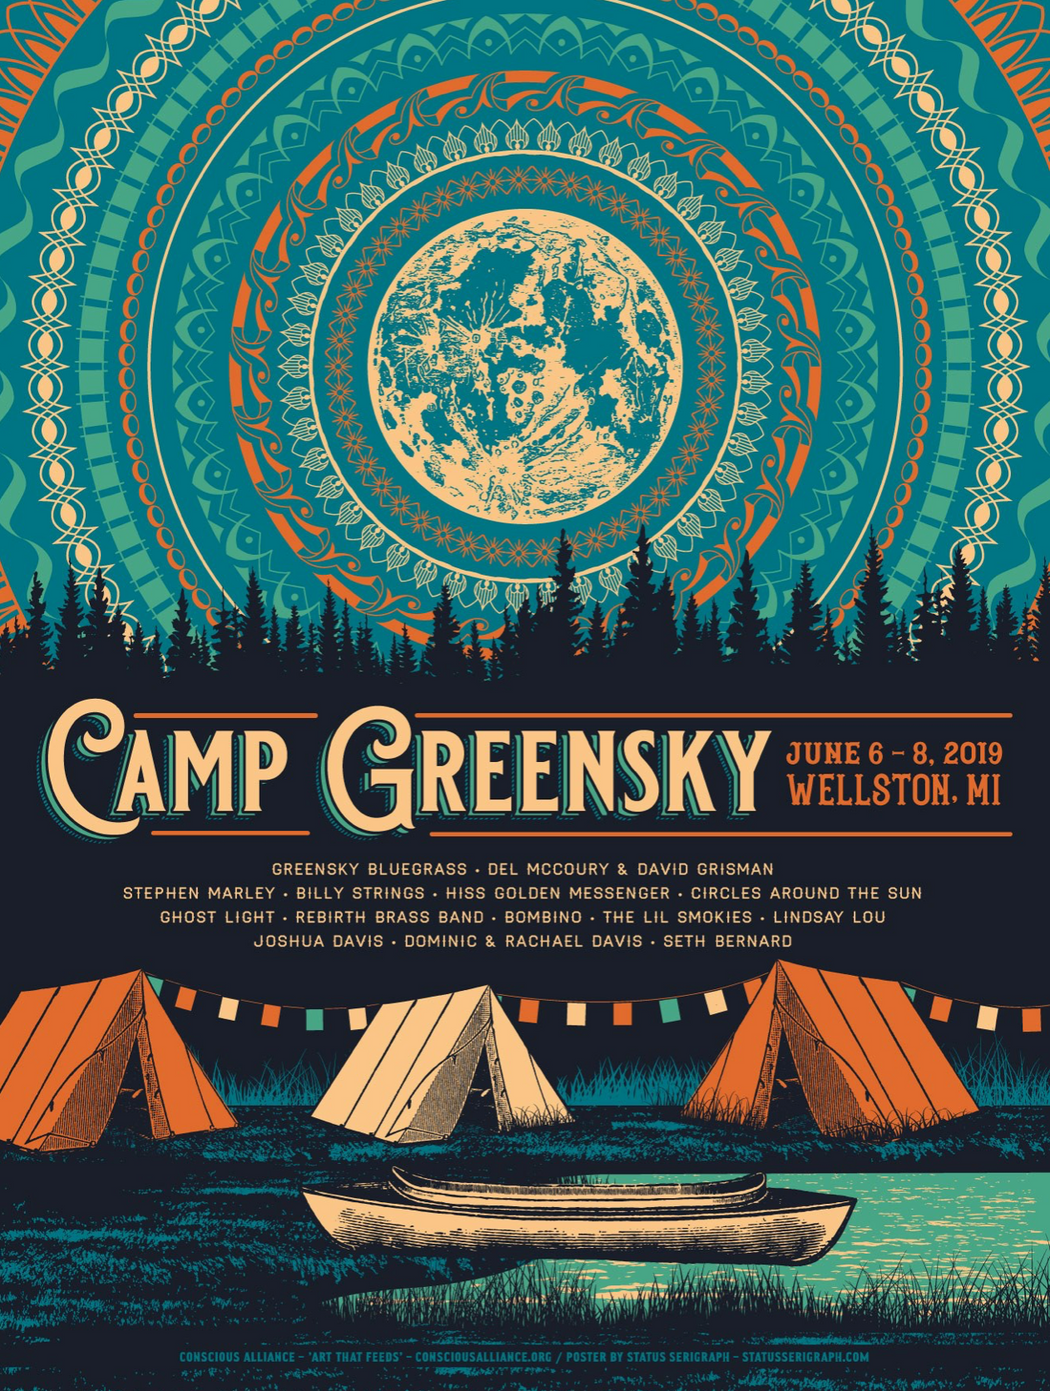 Camp Greensky Wellston - 2019